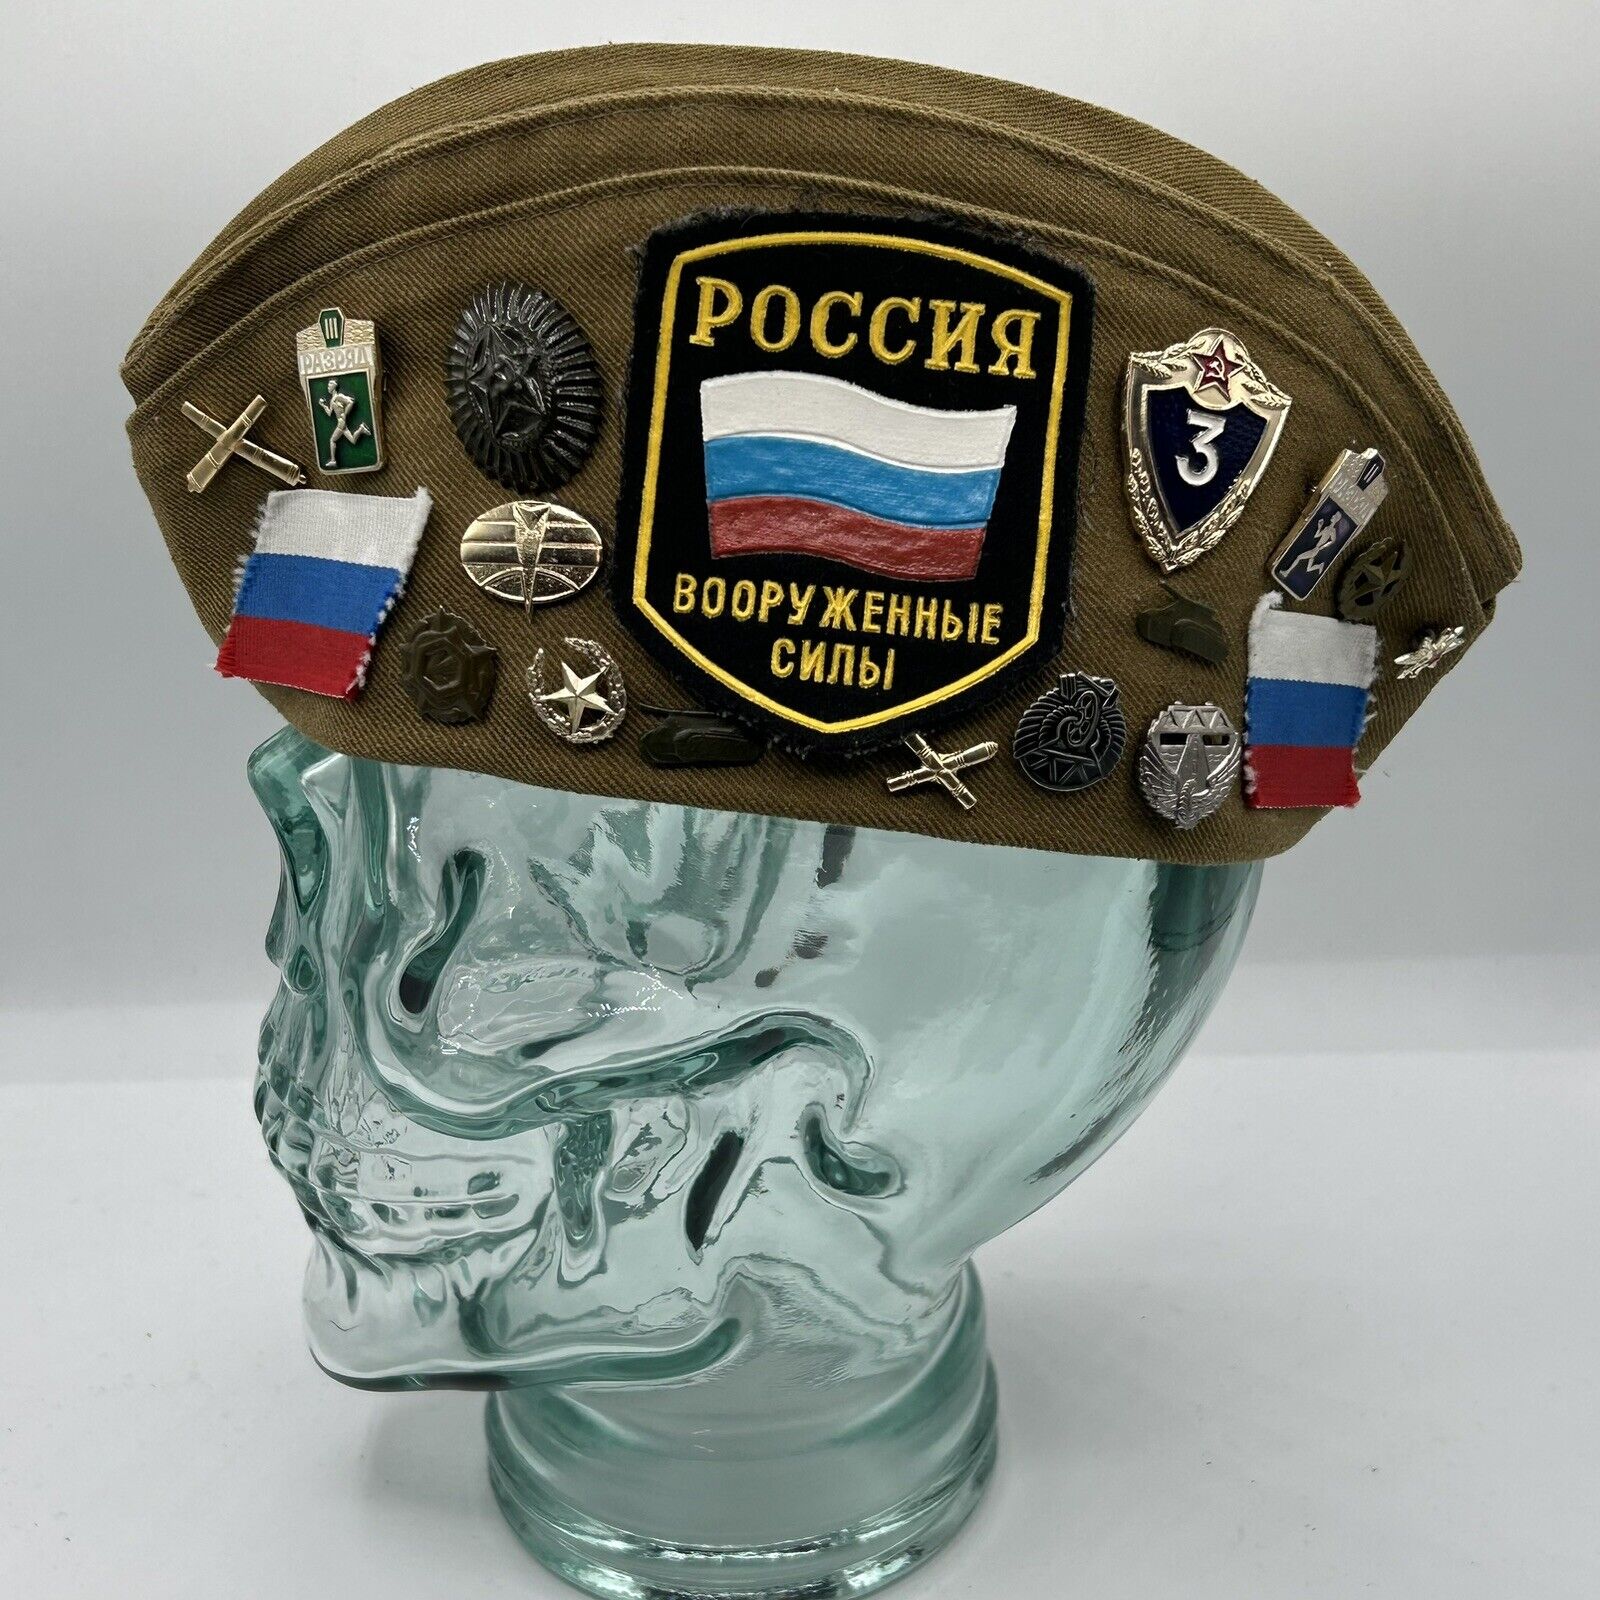 Vintage Pilotka Military Side Cap Soviet Soldier Hat Pins